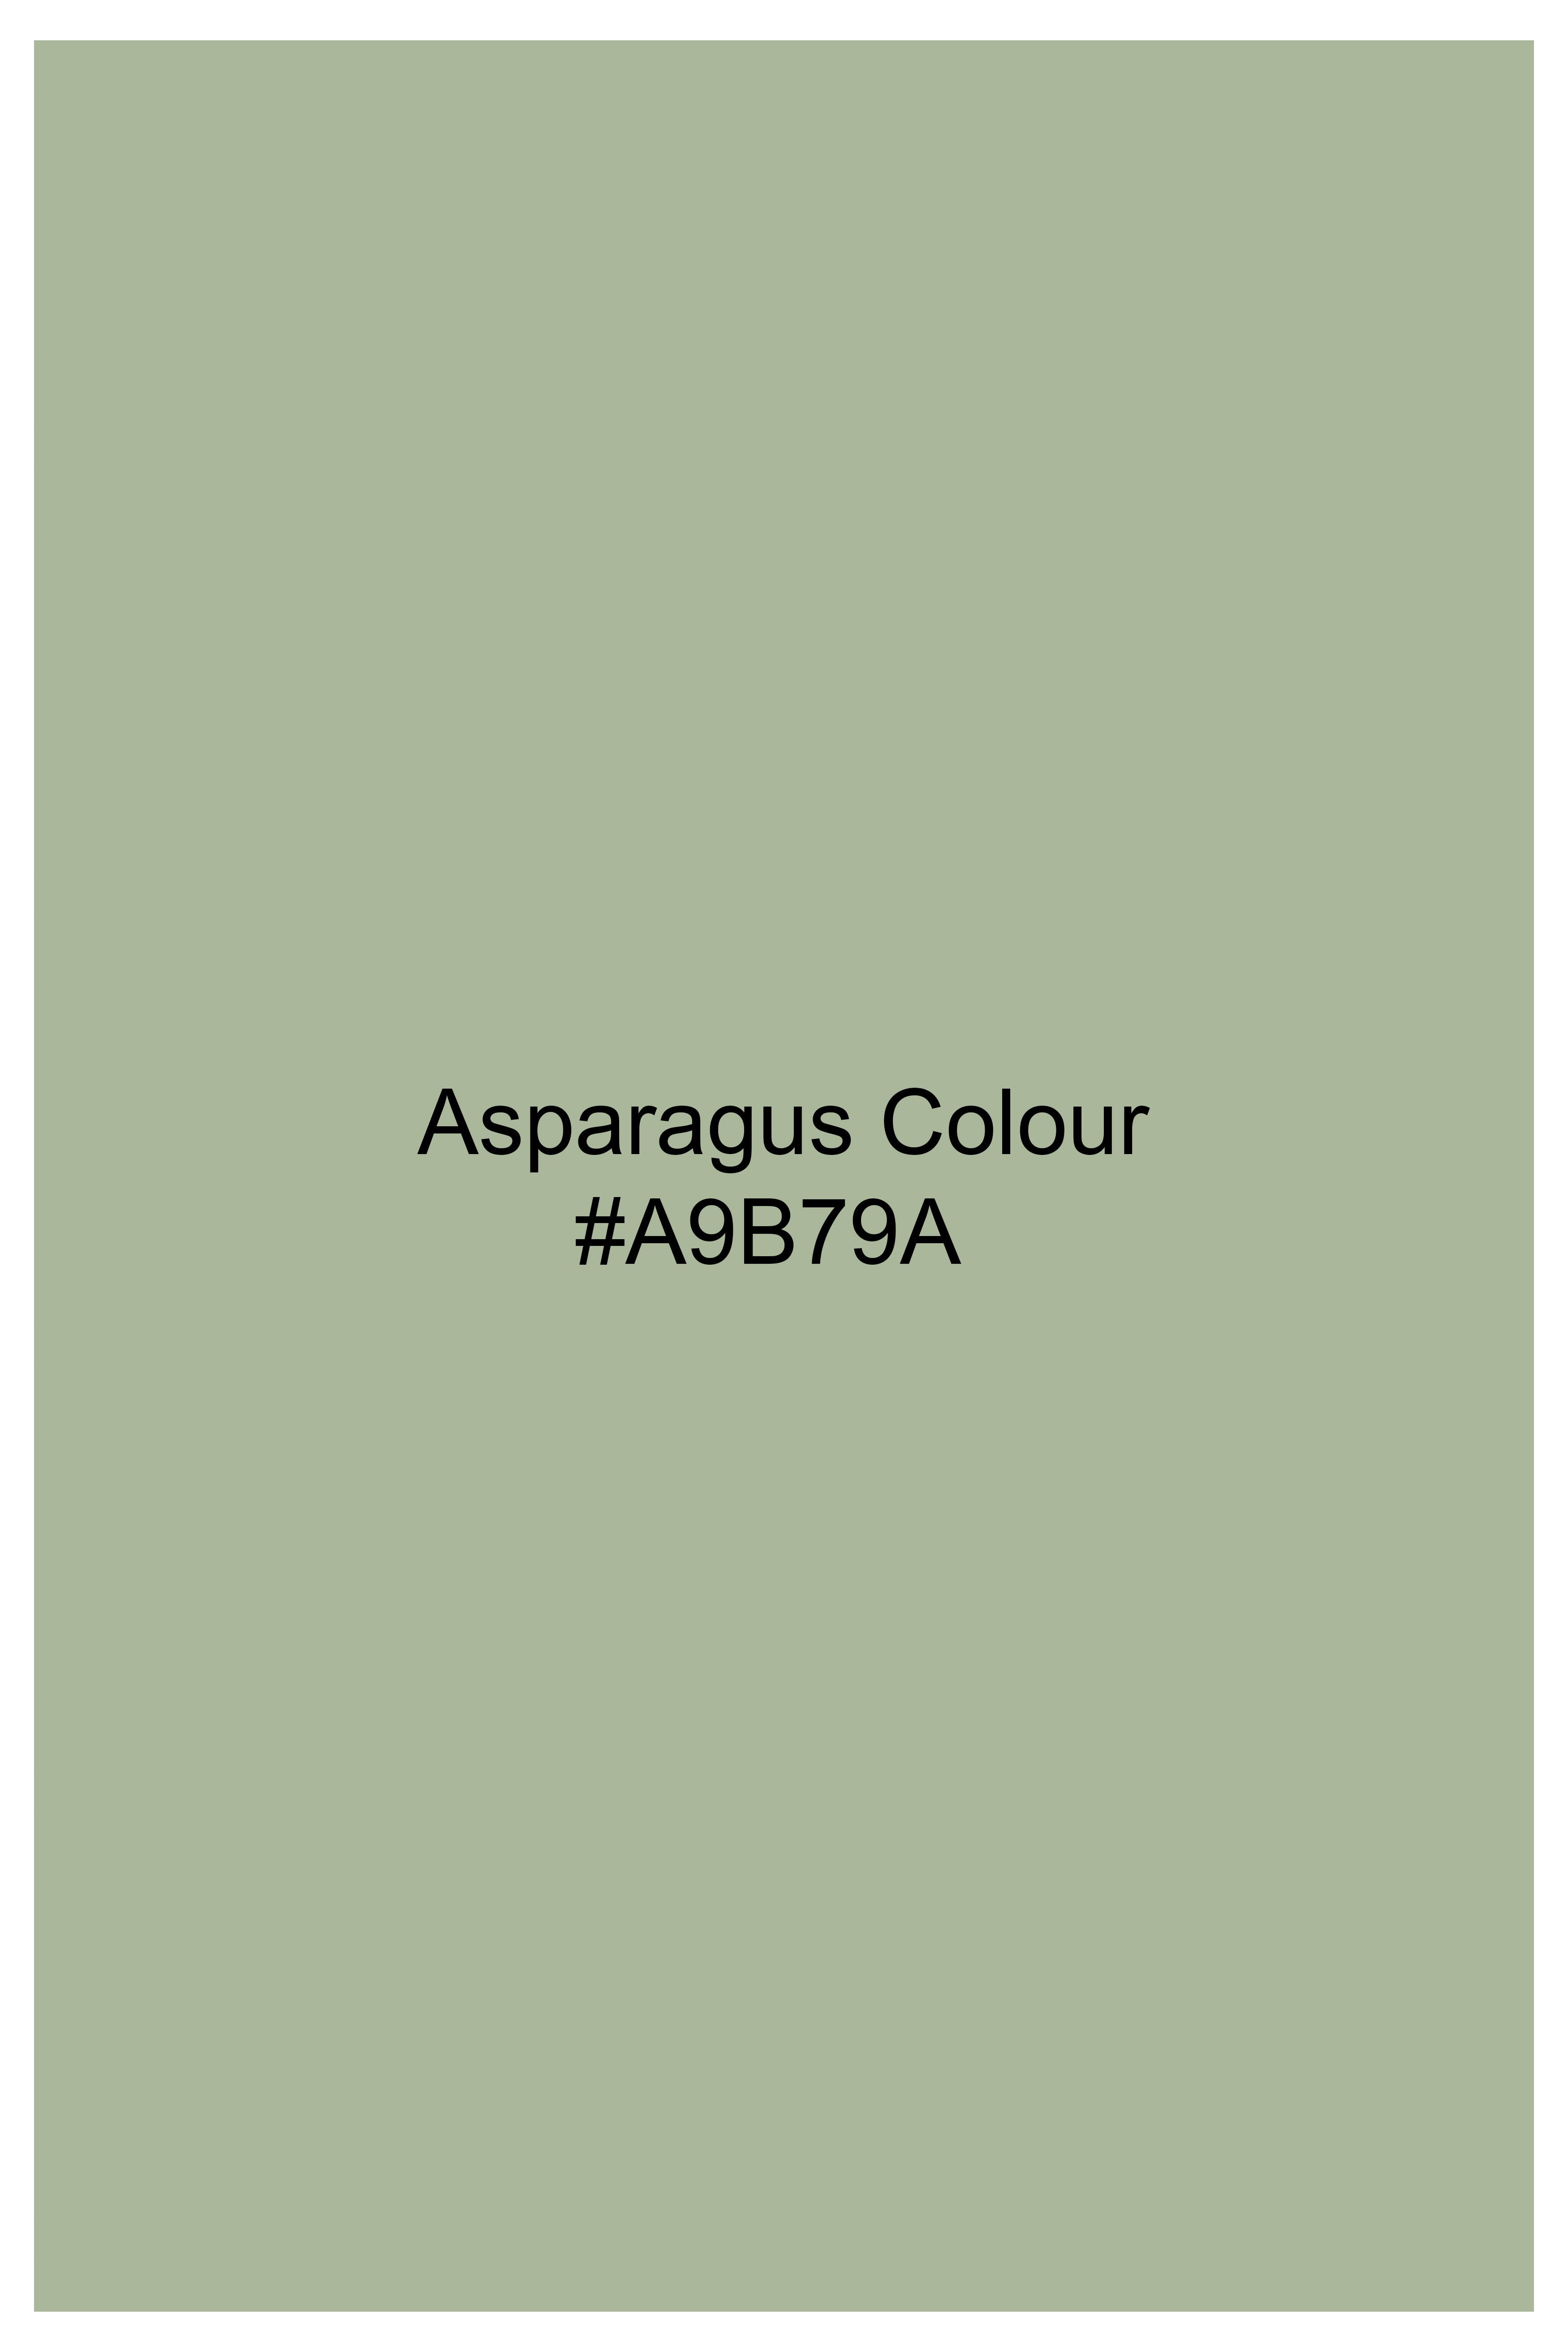 Asparagus Green with Horizontal Stitches Premium Cotton Bandhgala Designer Blazer BL2814-BG-D168-36, BL2814-BG-D168-38, BL2814-BG-D168-40, BL2814-BG-D168-42, BL2814-BG-D168-44, BL2814-BG-D168-46, BL2814-BG-D168-48, BL2814-BG-D168-50, BL2814-BG-D168-52, BL2814-BG-D168-54, BL2814-BG-D168-56, BL2814-BG-D168-58, BL2814-BG-D168-60